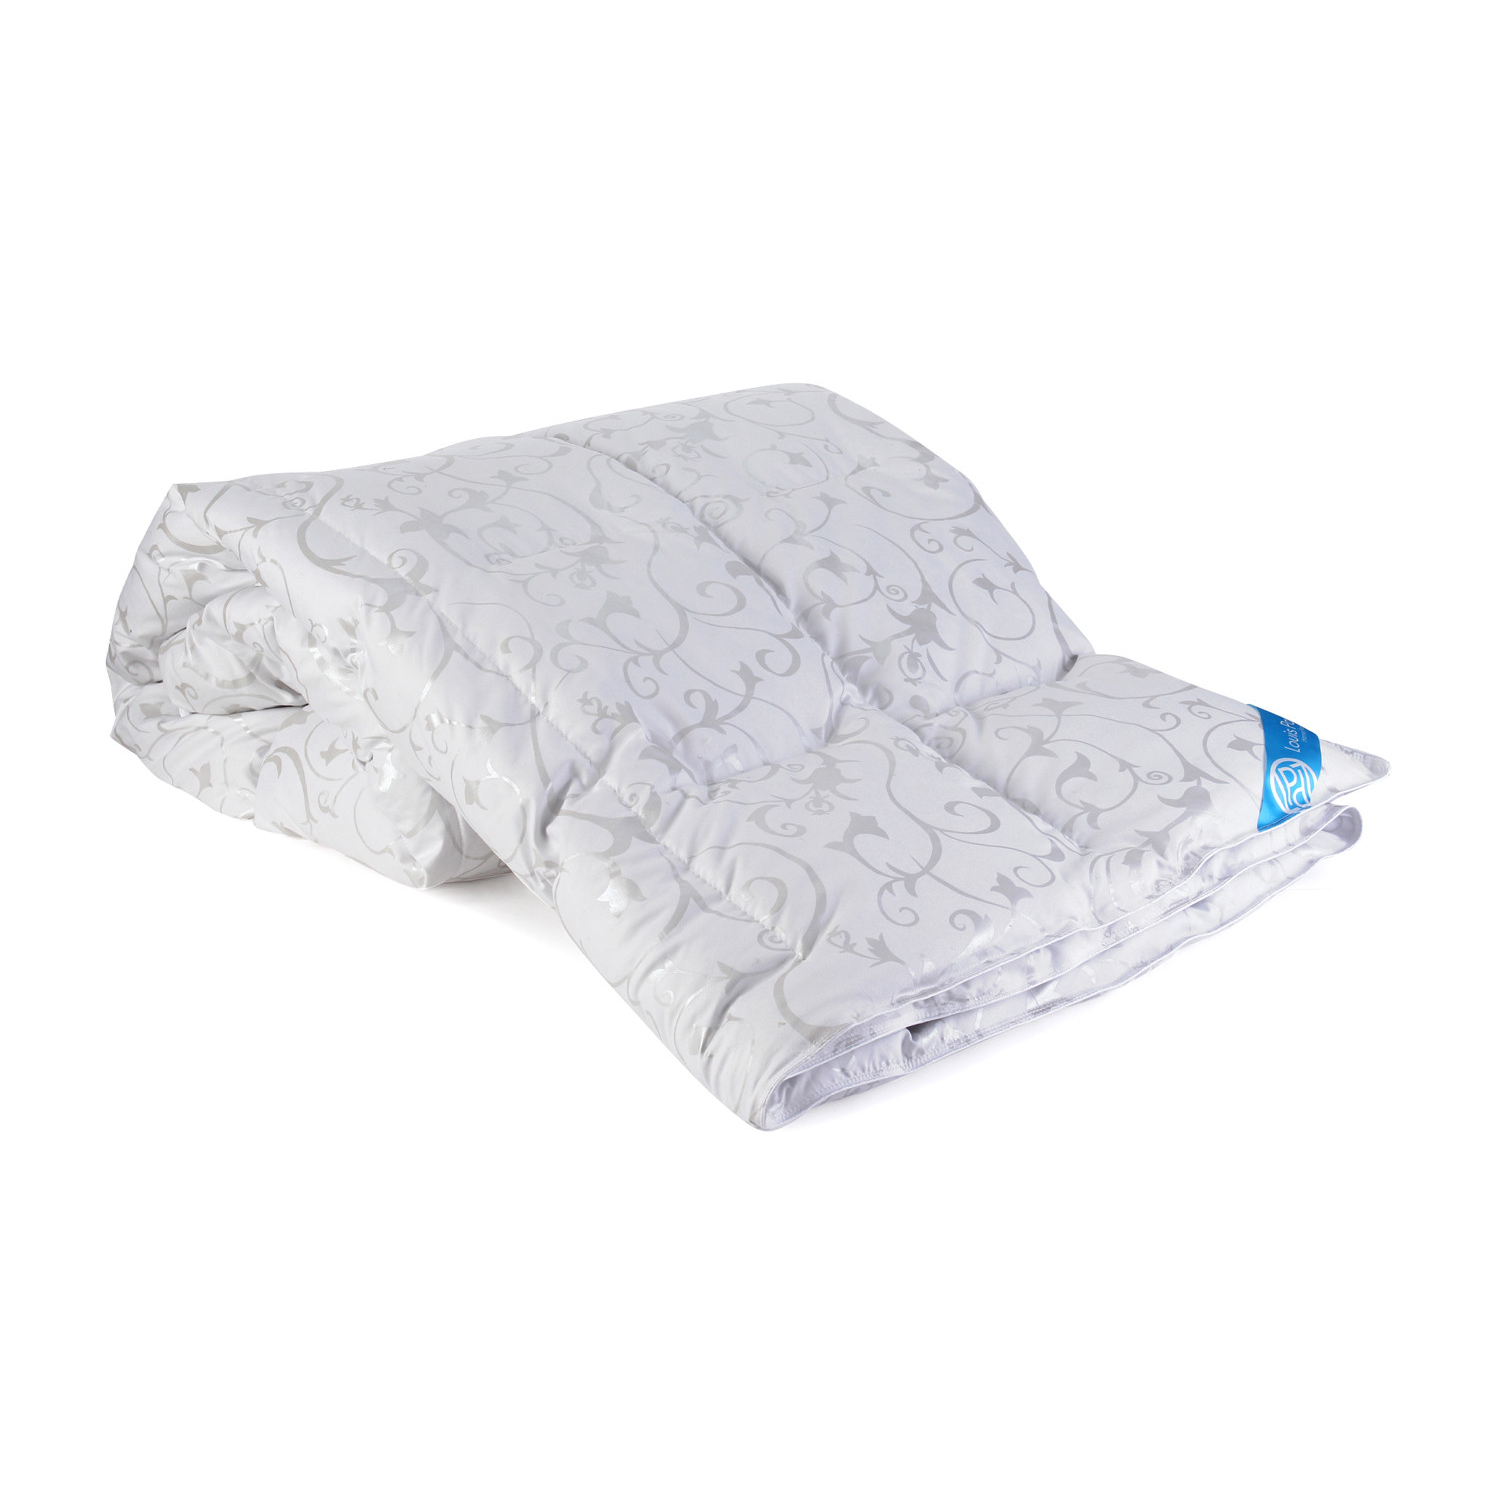 Пуховое одеяло Louis Pascal Эмма белое с серым 140х205 см (ЛП2066) пуховое одеяло louis pascal николь бежевое 200х220 см лп2022